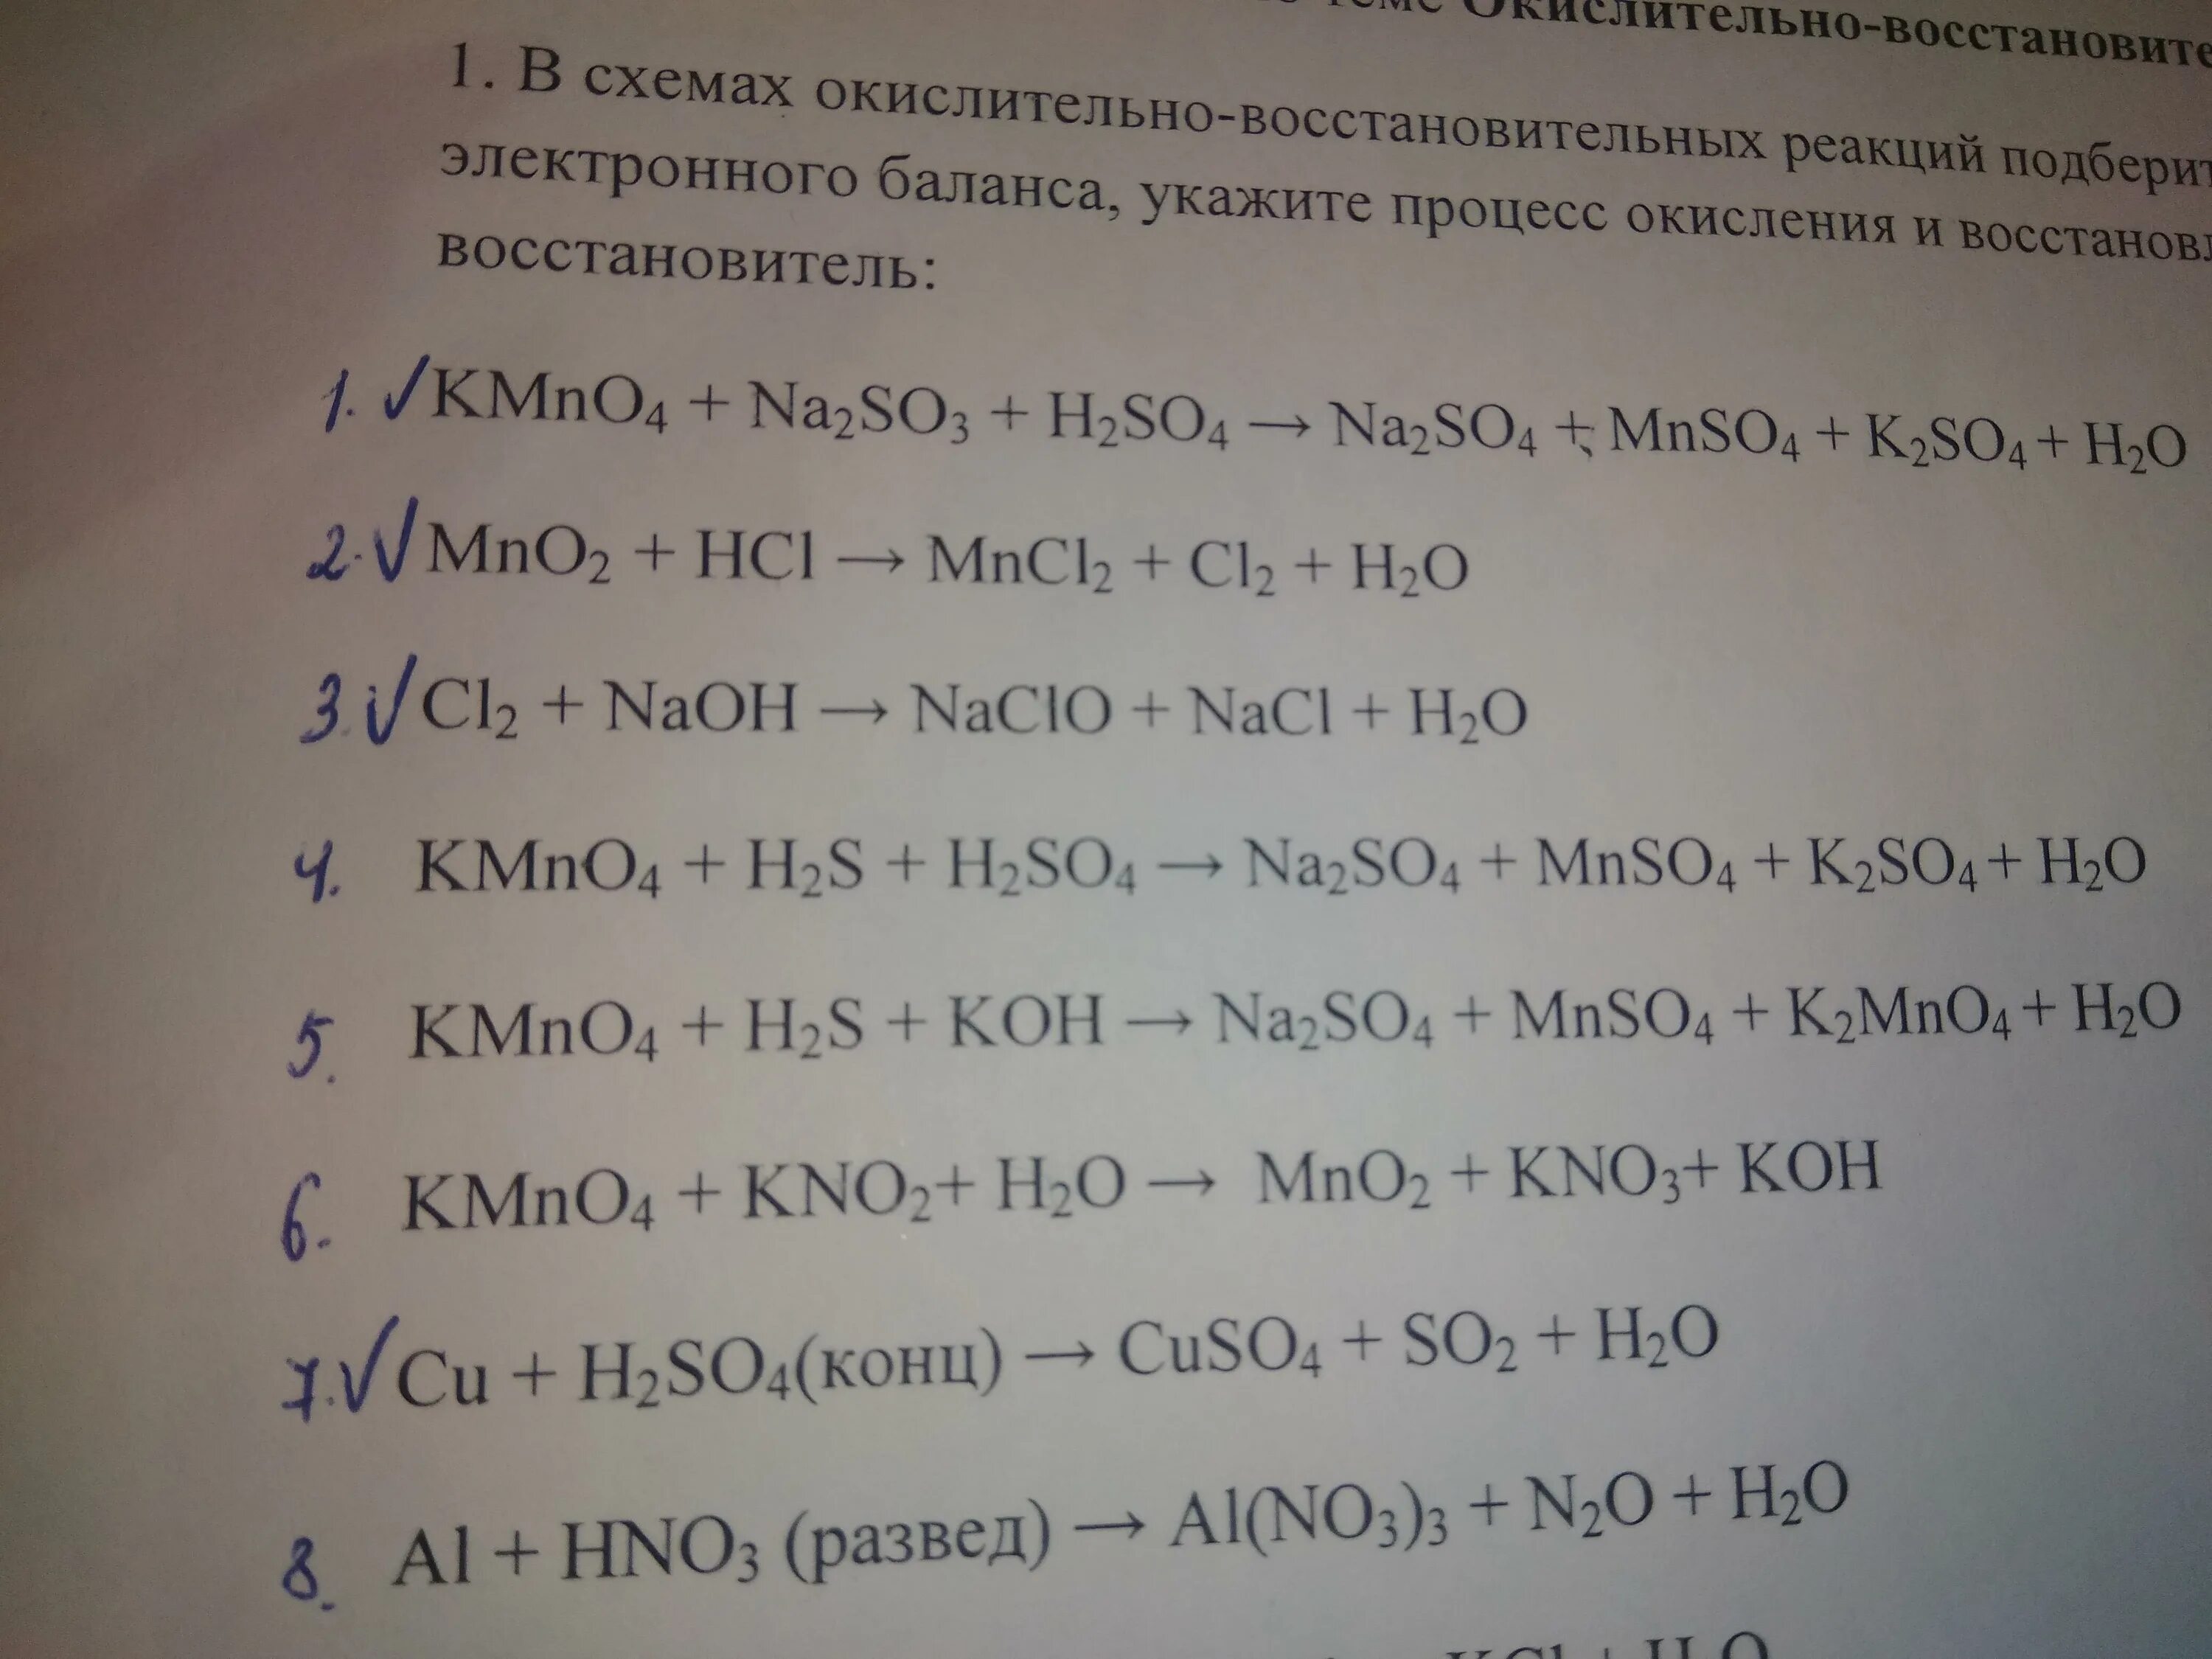 S o koh. 2kmno4 k2mno4 mno2 o2 сумма коэффициентов. Ph3 kmno4 h2so4 h3po4 mnso4 k2so4 h2o. Пропин kmno4 Koh.